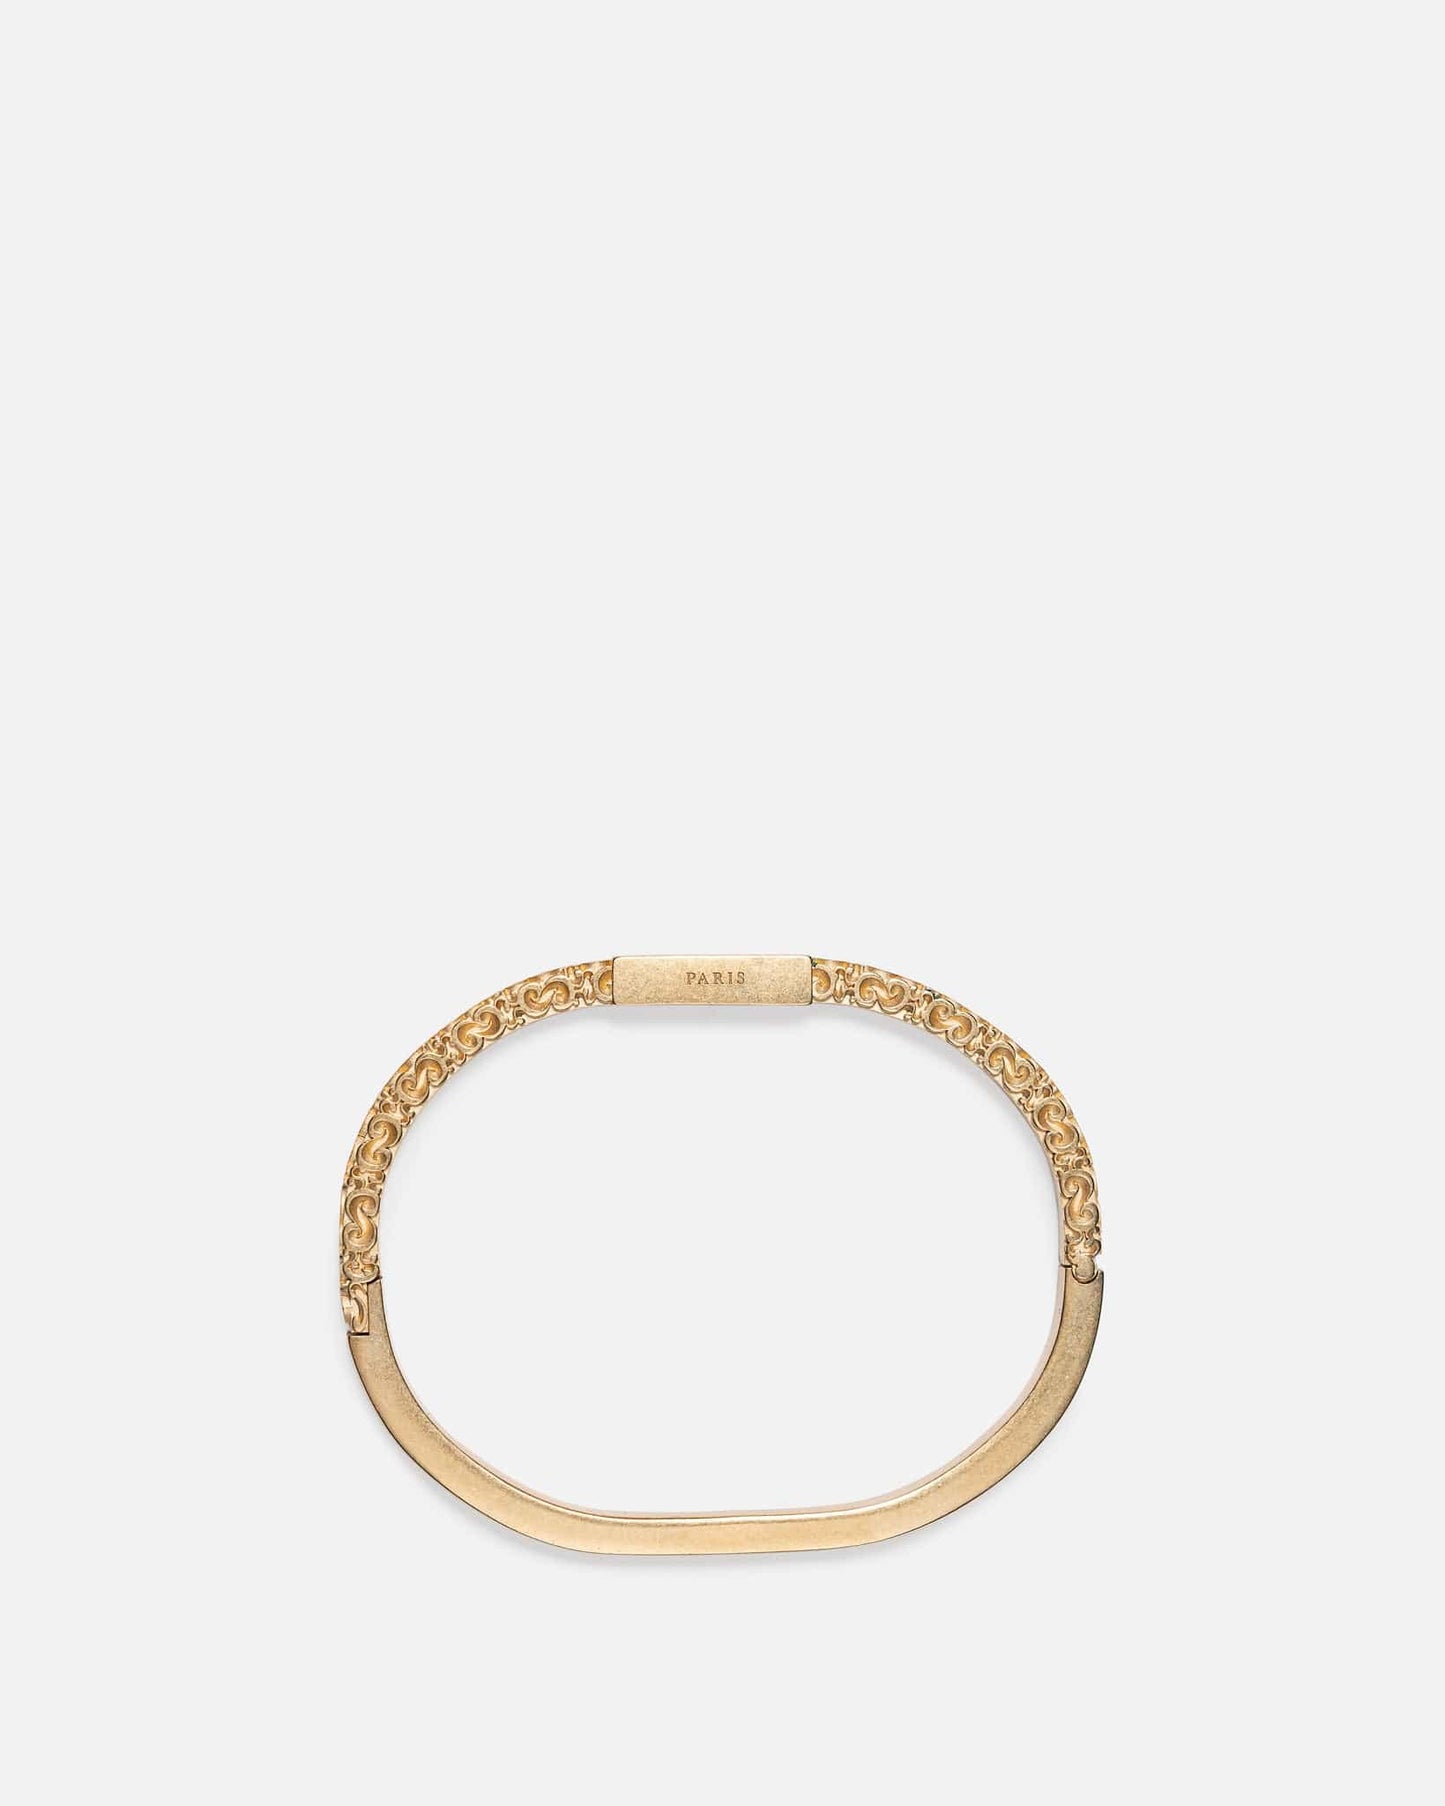 Maison Margiela Jewelry Engraved Bracelet in Gold